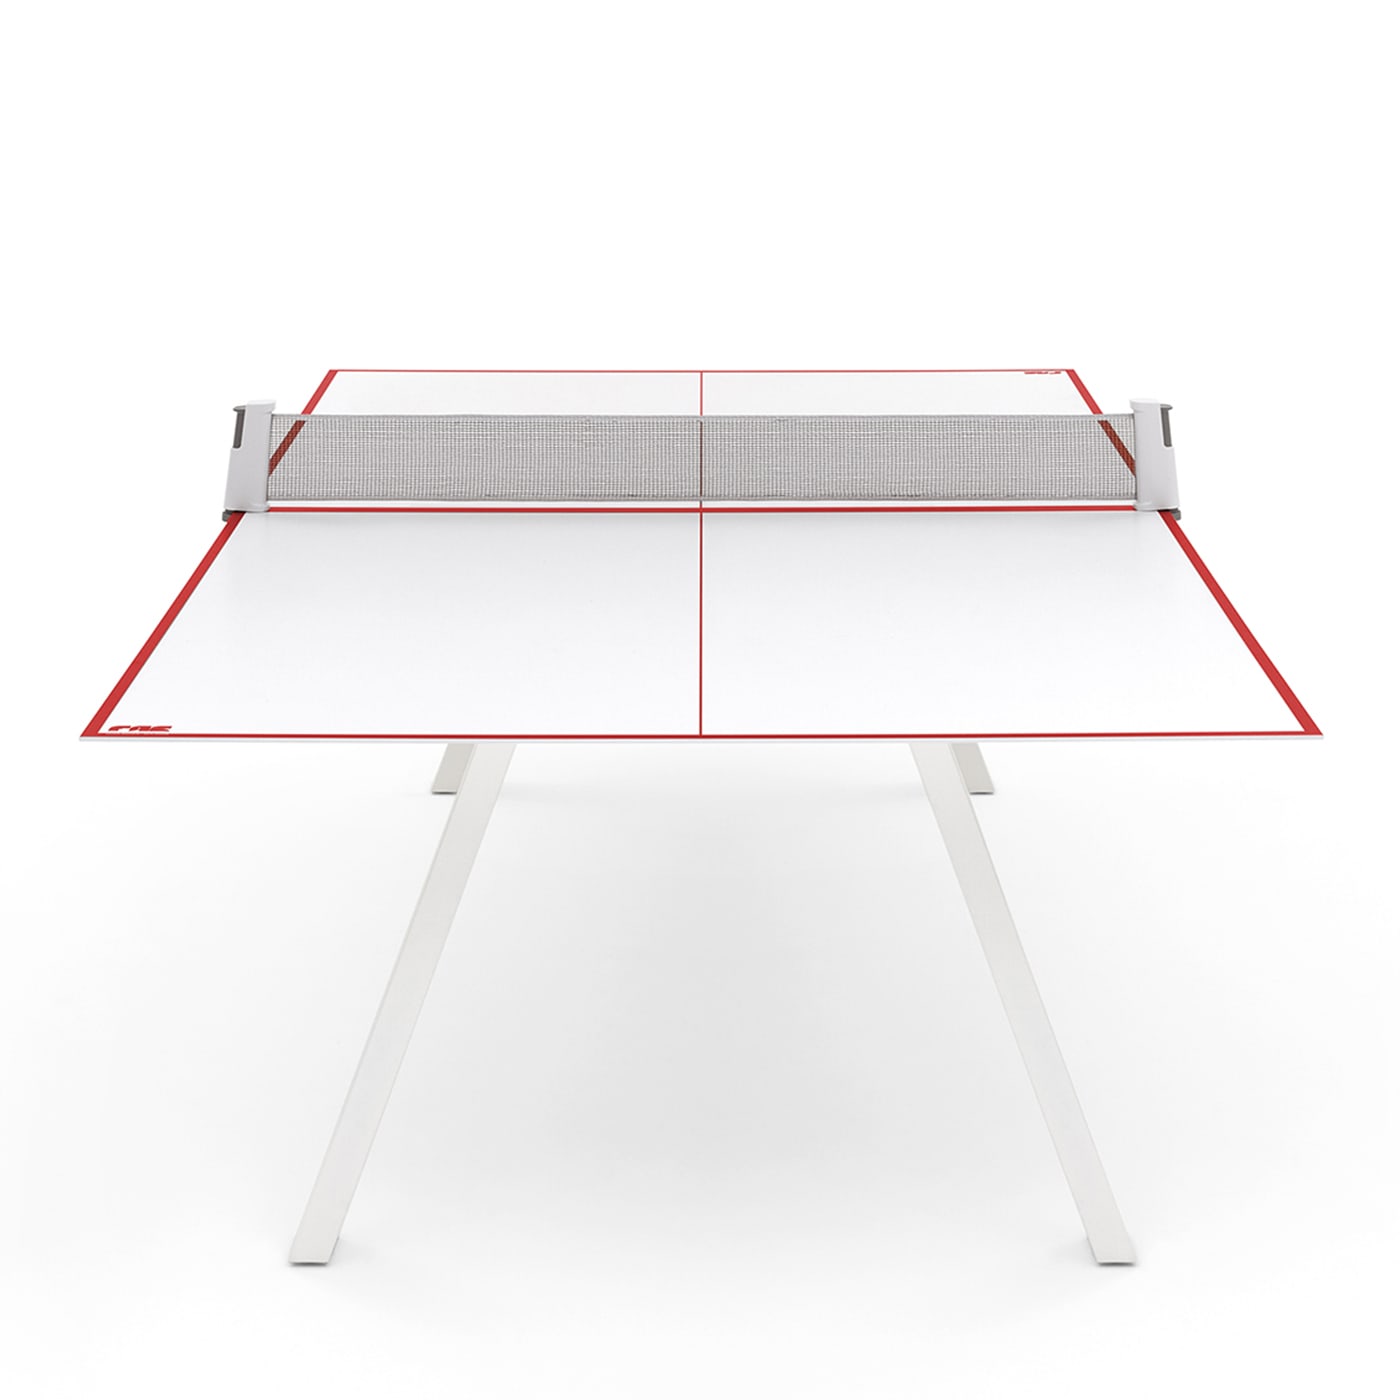 Grasshopper Outdoor White Ping Pong Table by Basaglia + Rota Nodari - Fas Pendezza